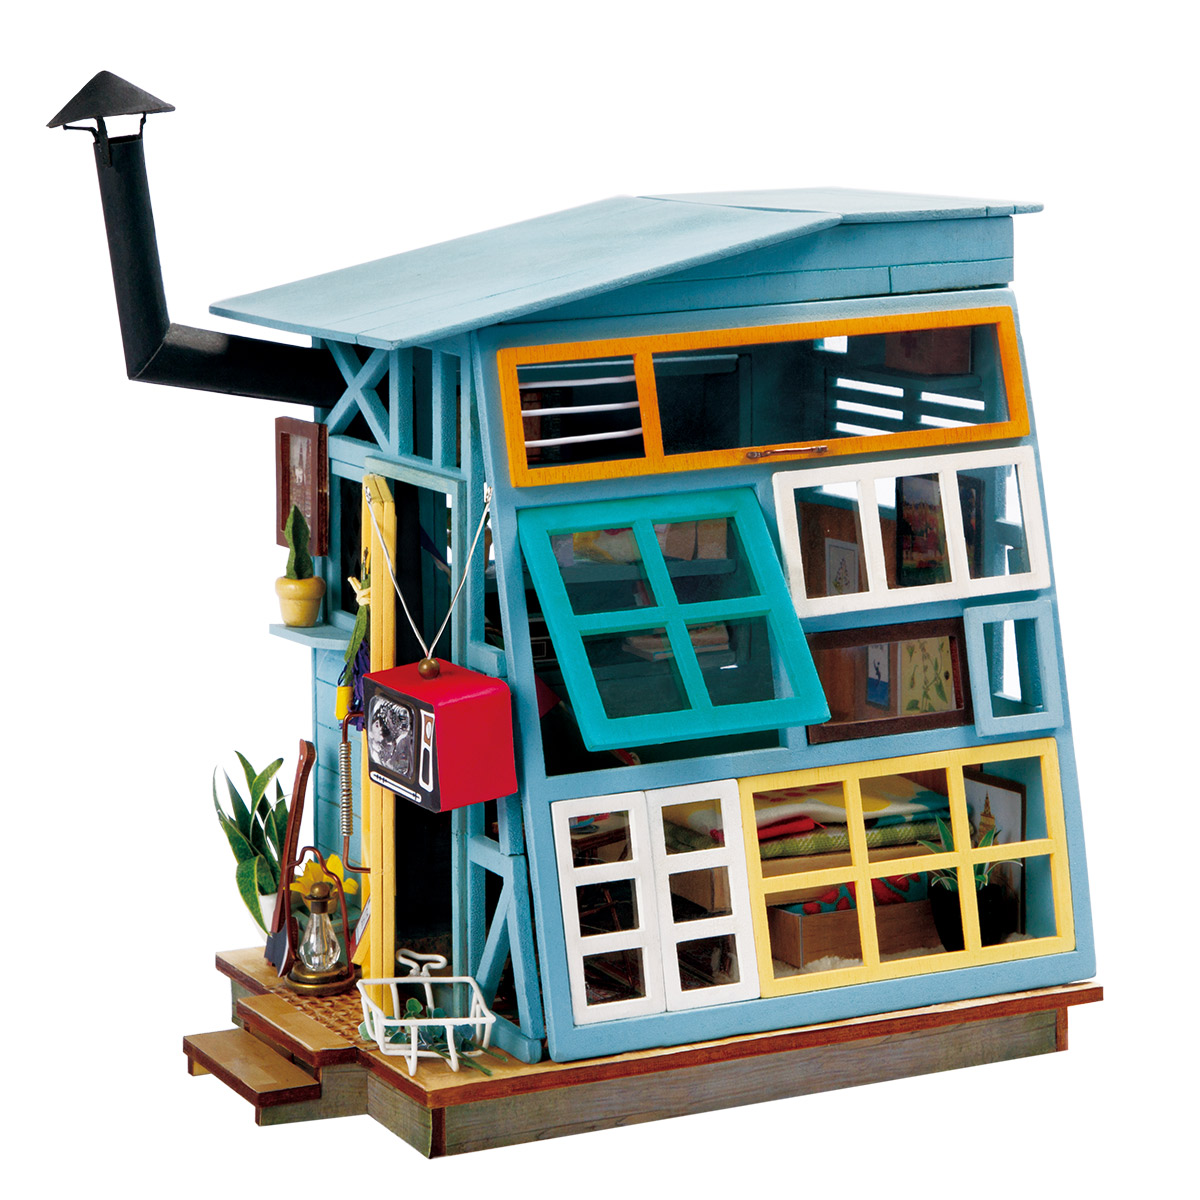 rolife miniature house